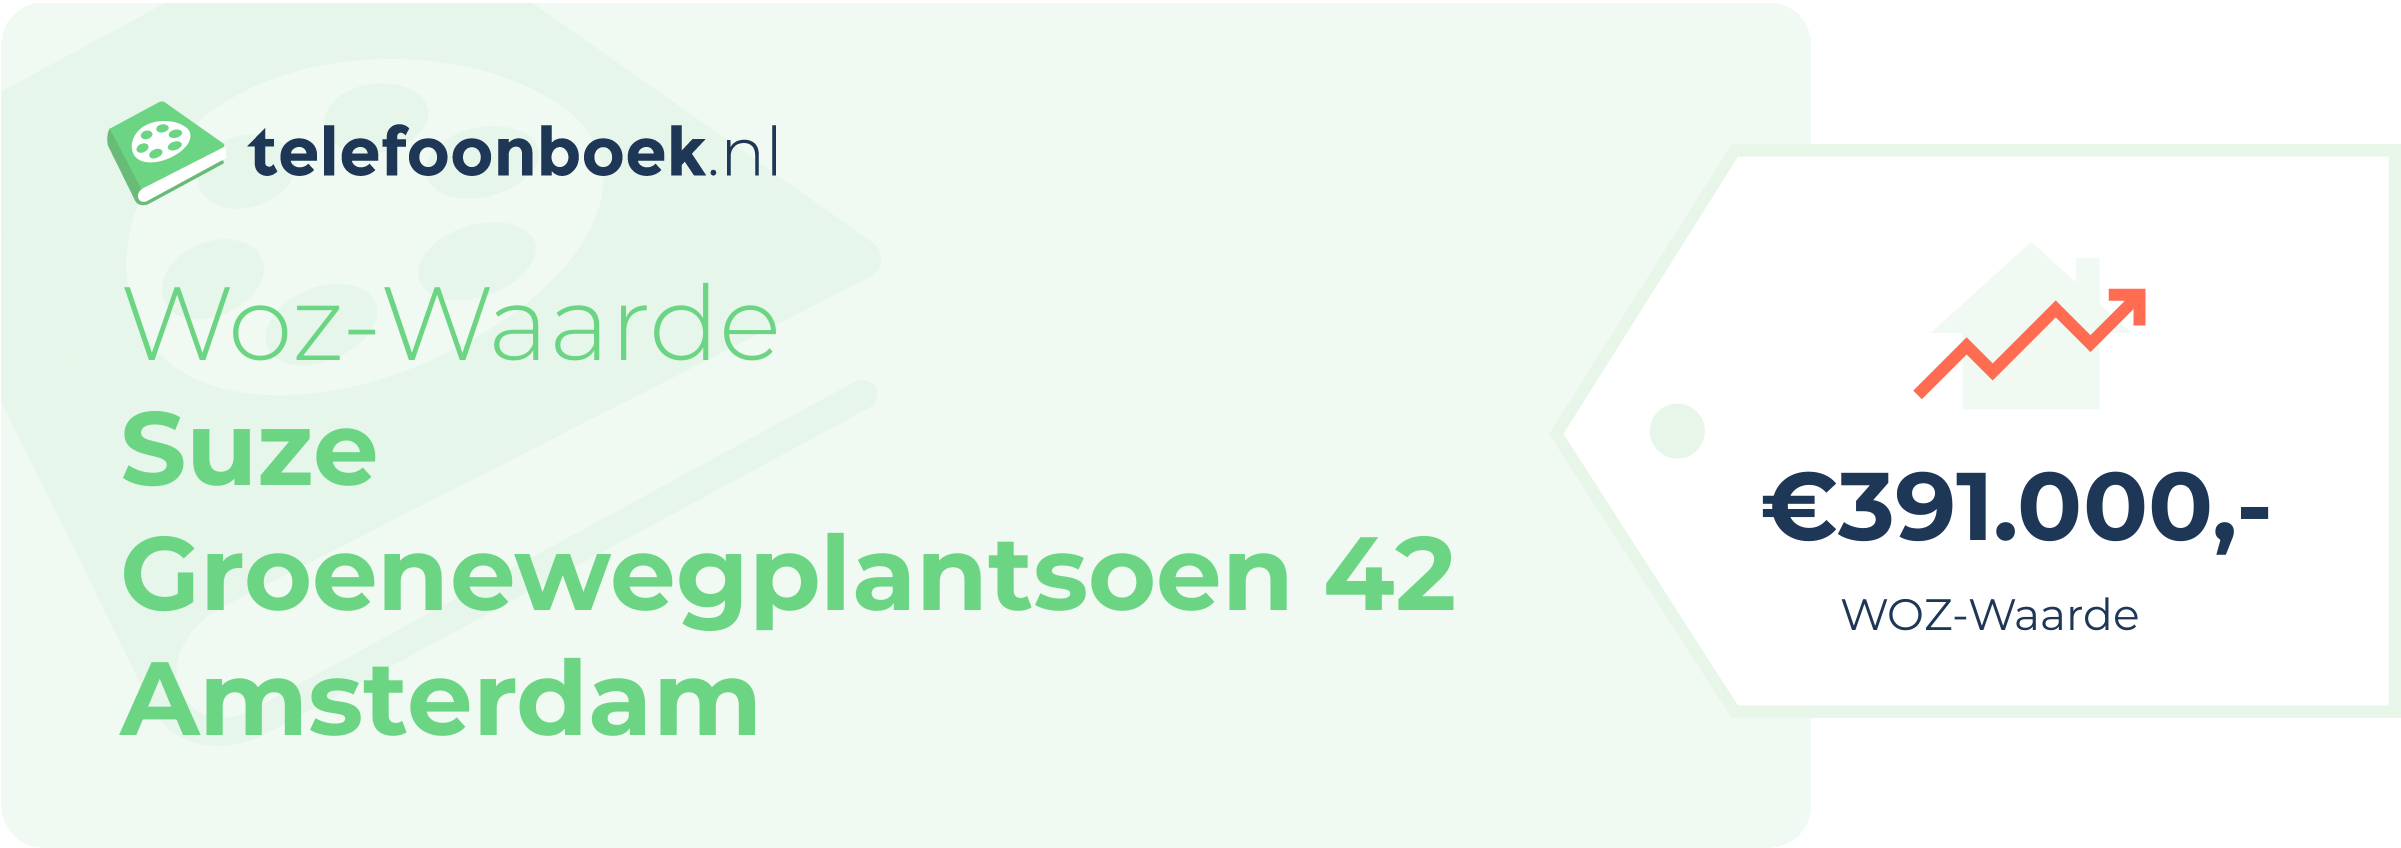 WOZ-waarde Suze Groenewegplantsoen 42 Amsterdam